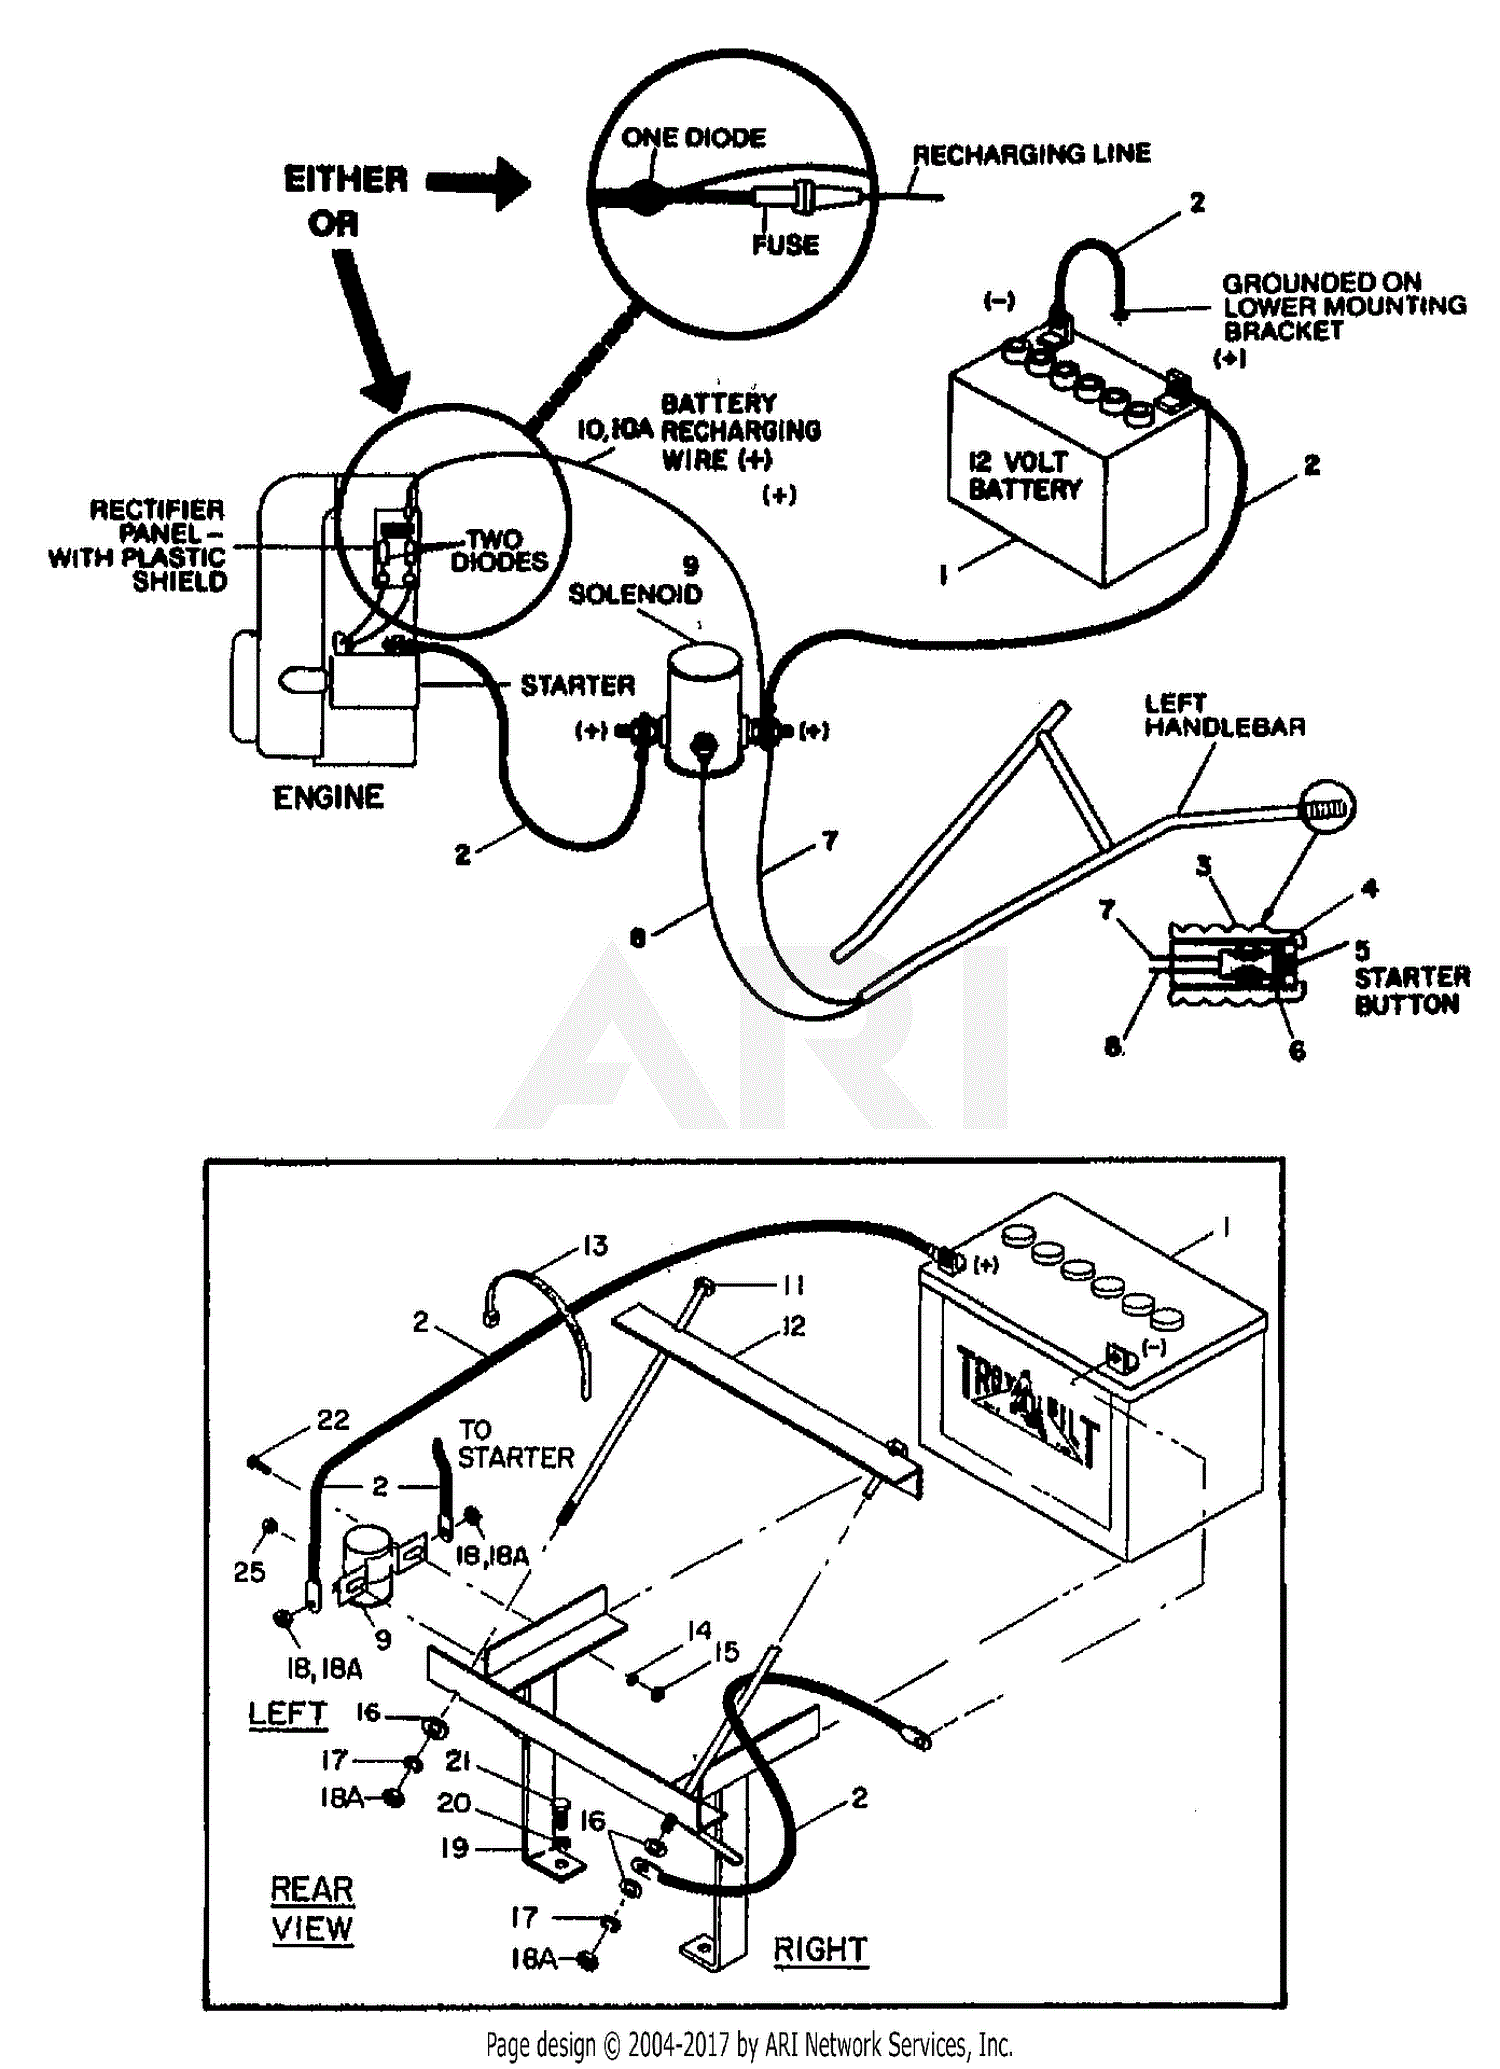 2013 troy bilt 17.5 hp riding mower wiring diagram